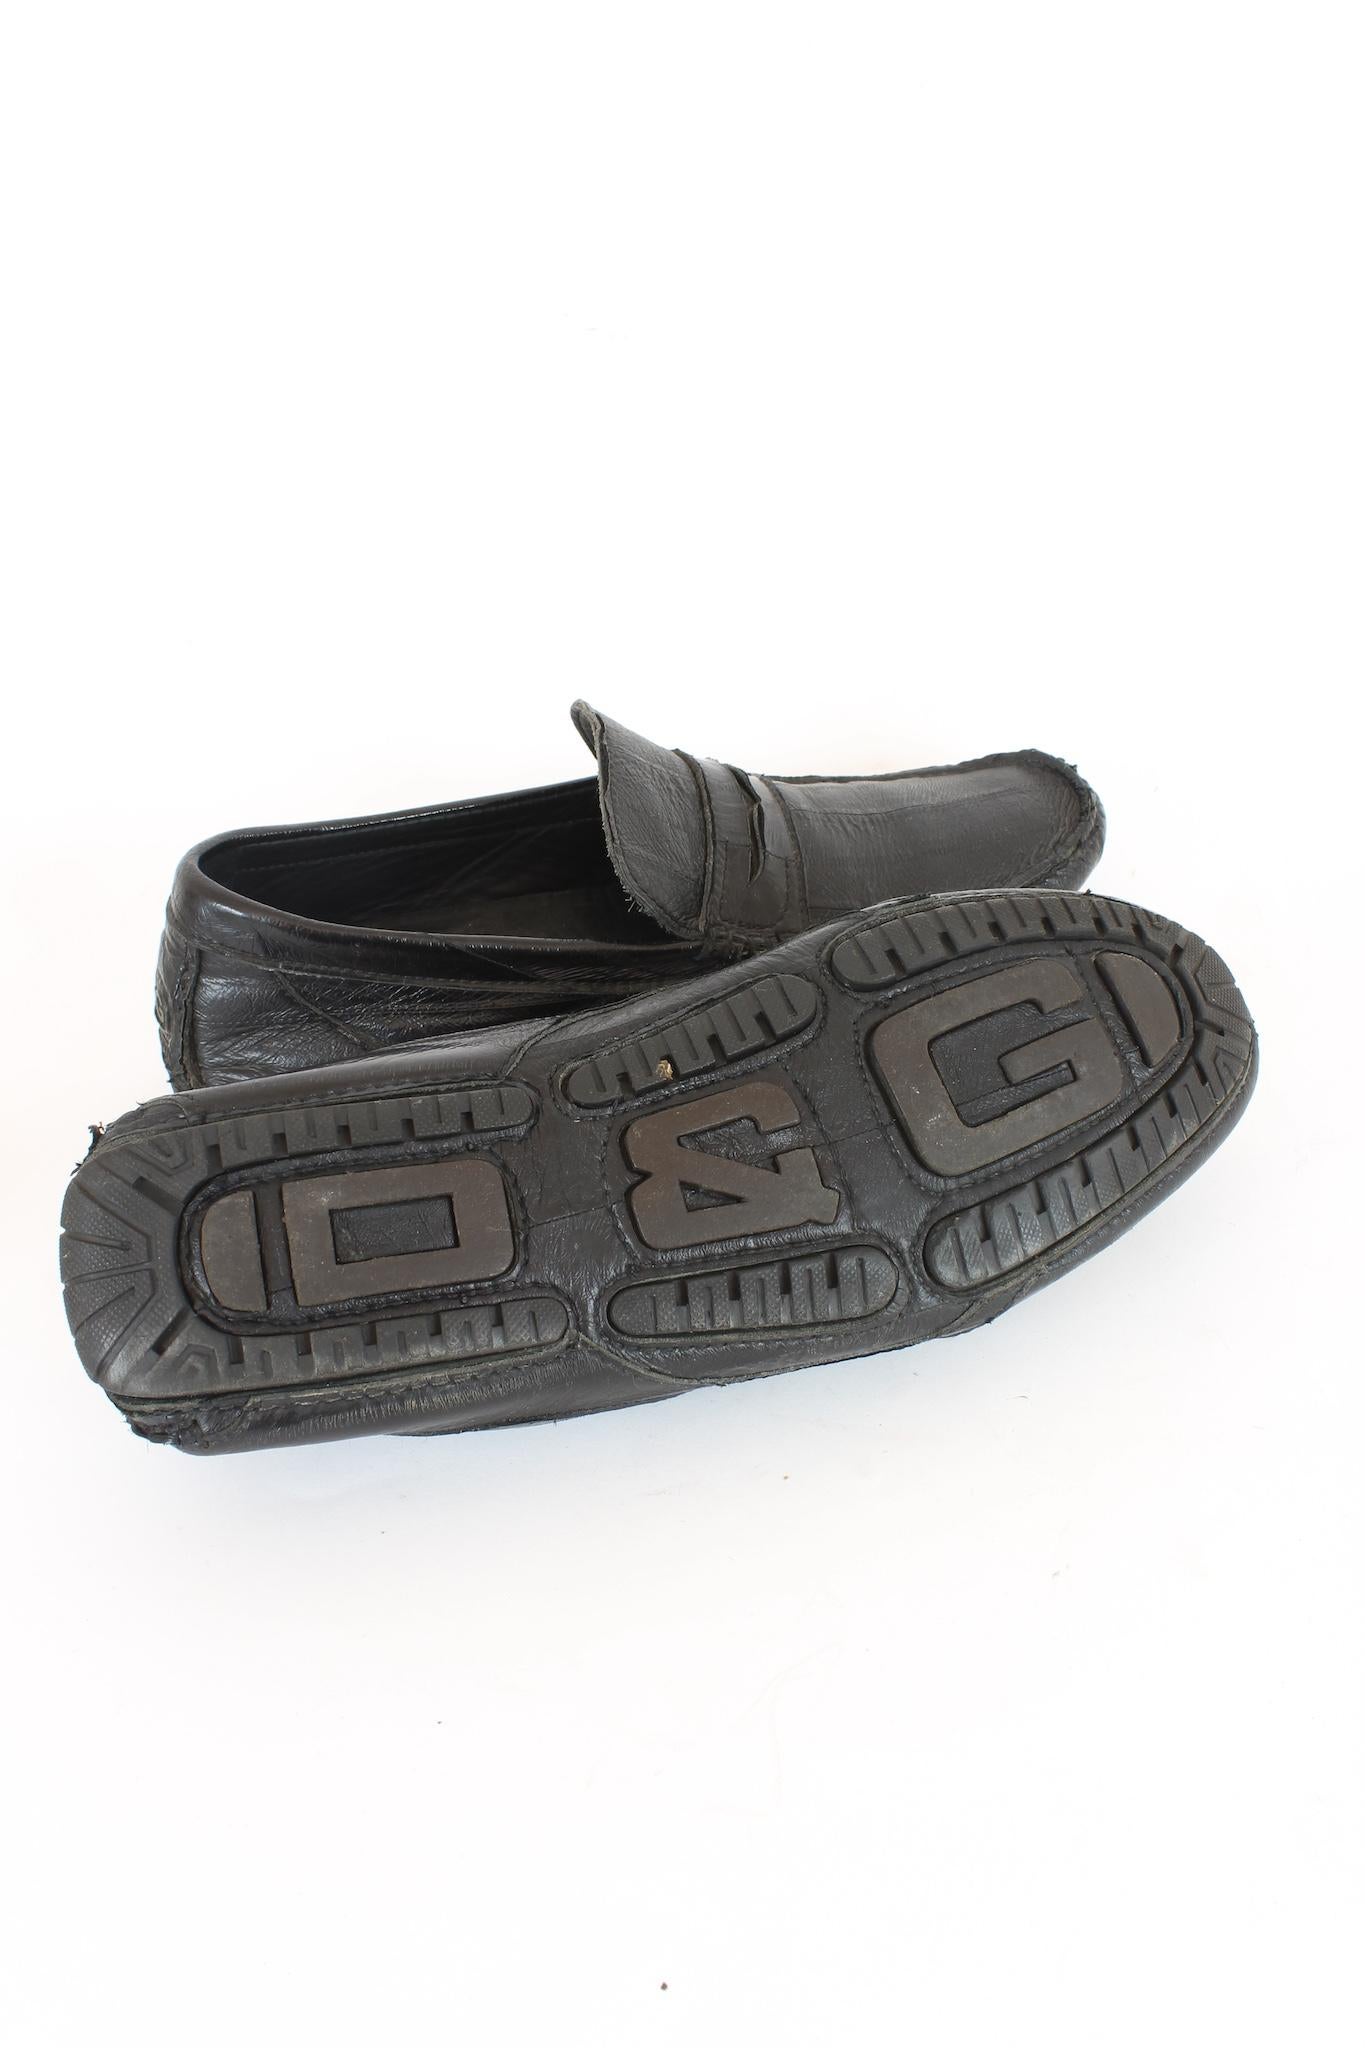 Dolce & Gabbana Black Leather Mocassins Shoes 2000s For Sale 1